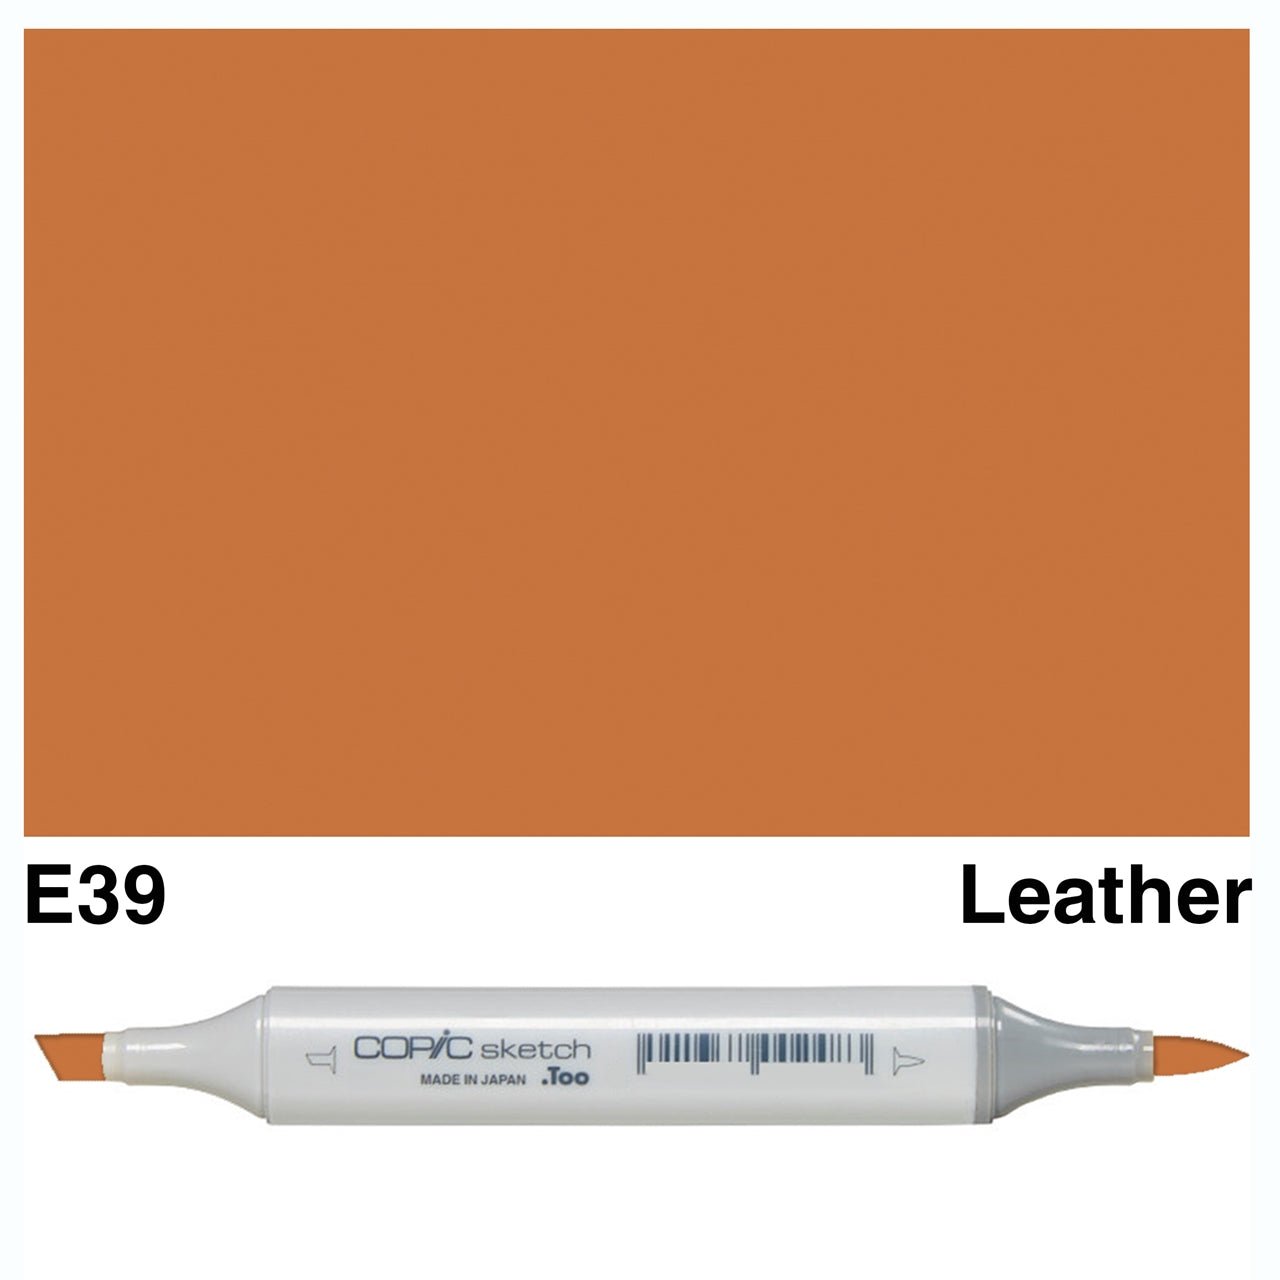 Copic Sketch E39 Leather - theartshop.com.au